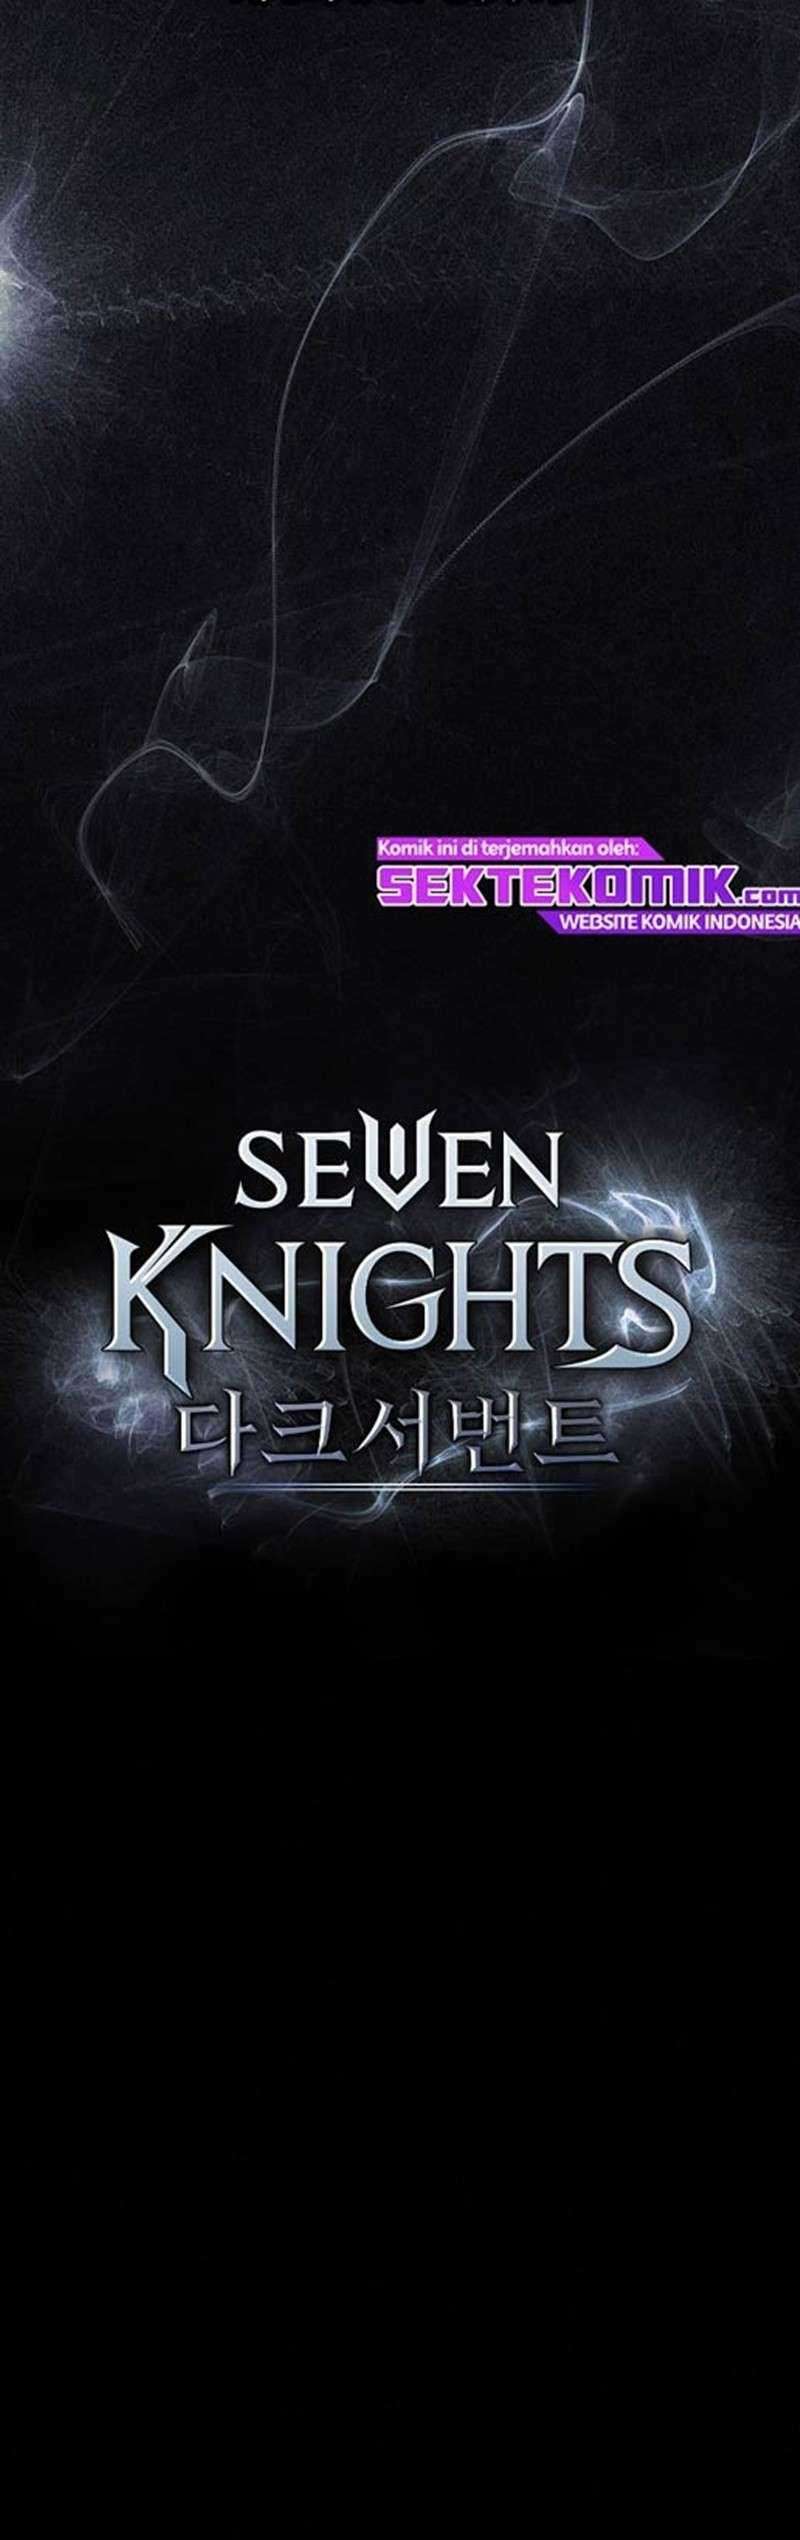 Seven Knights: Dark Servant Chapter 0